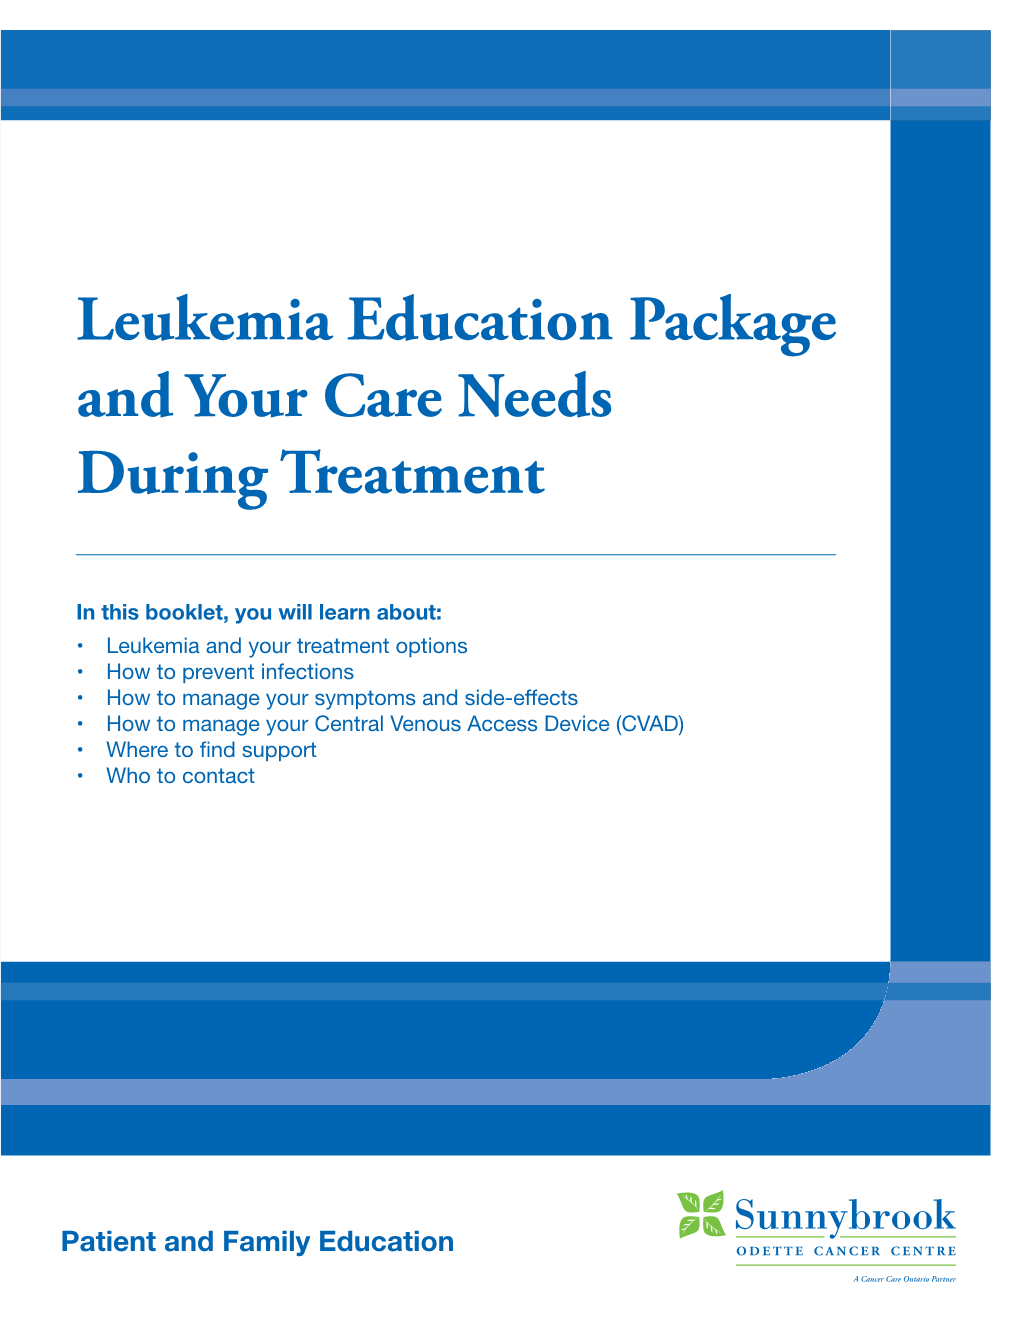 Leukemia Education Package.Indd